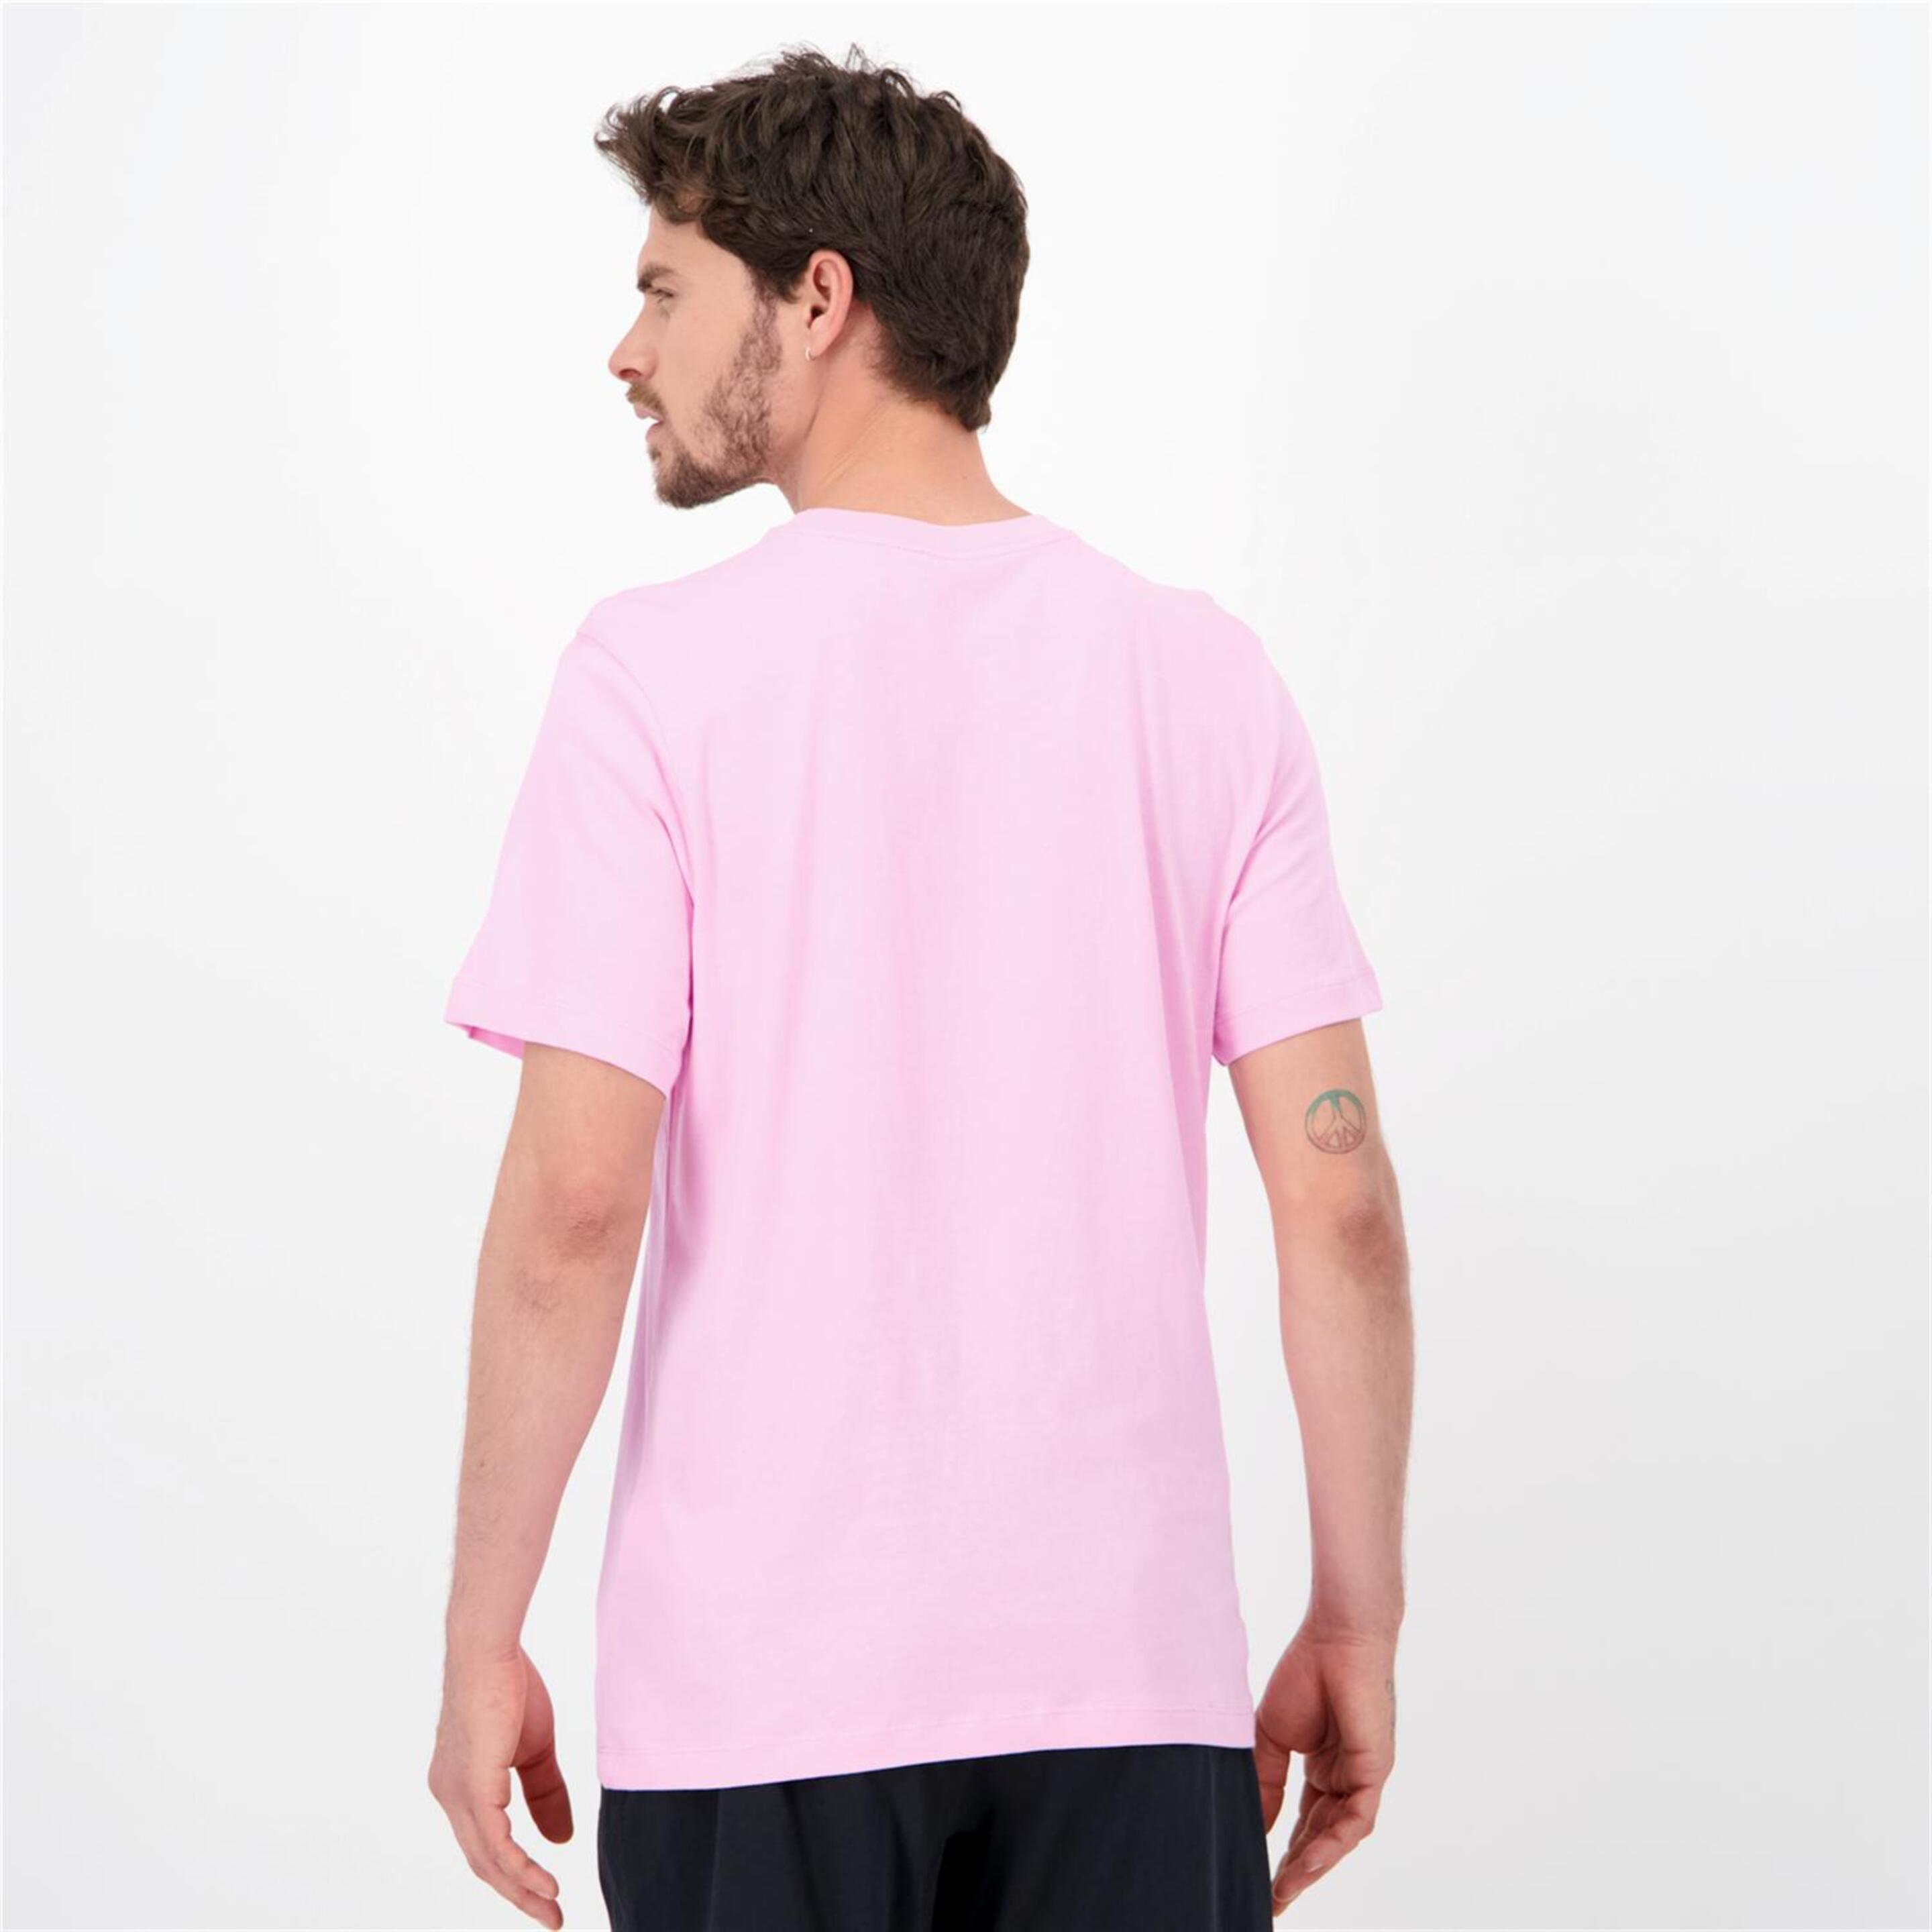 Nike Club Swoosh - Rosa - Camiseta Hombre